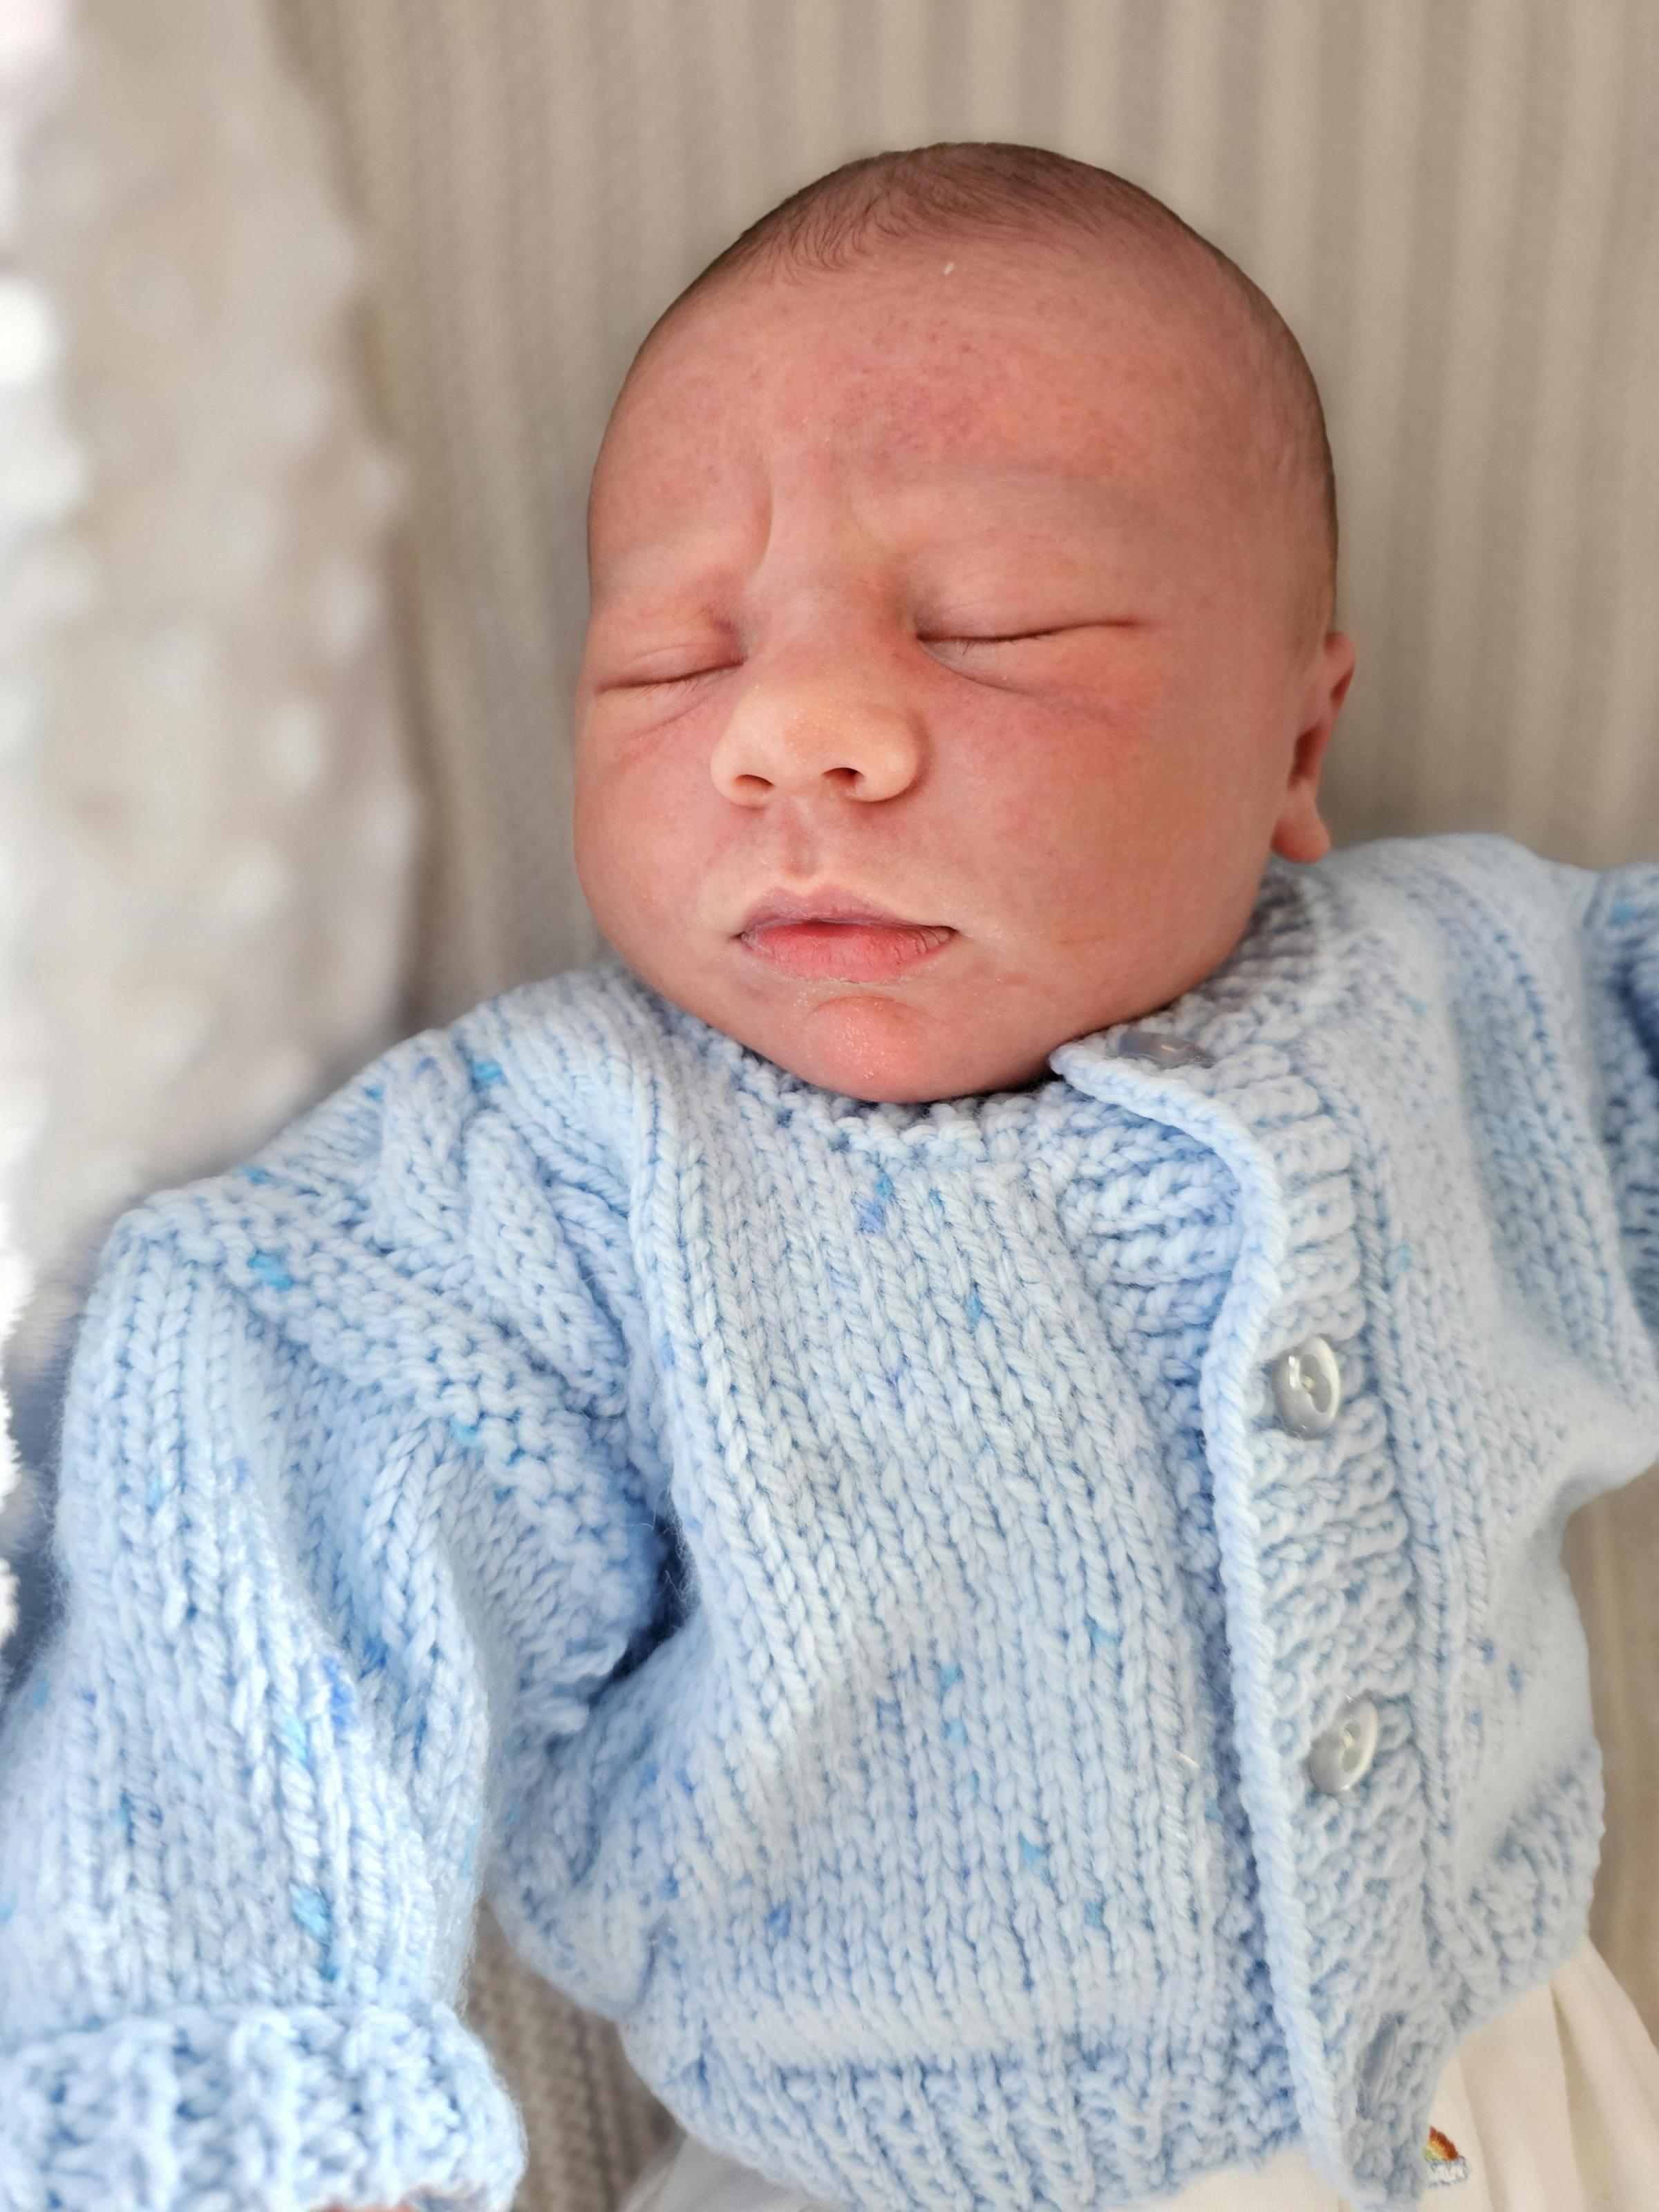 Cillian Luke Carlson was born in the Nest at Warrington Hospital on March 19